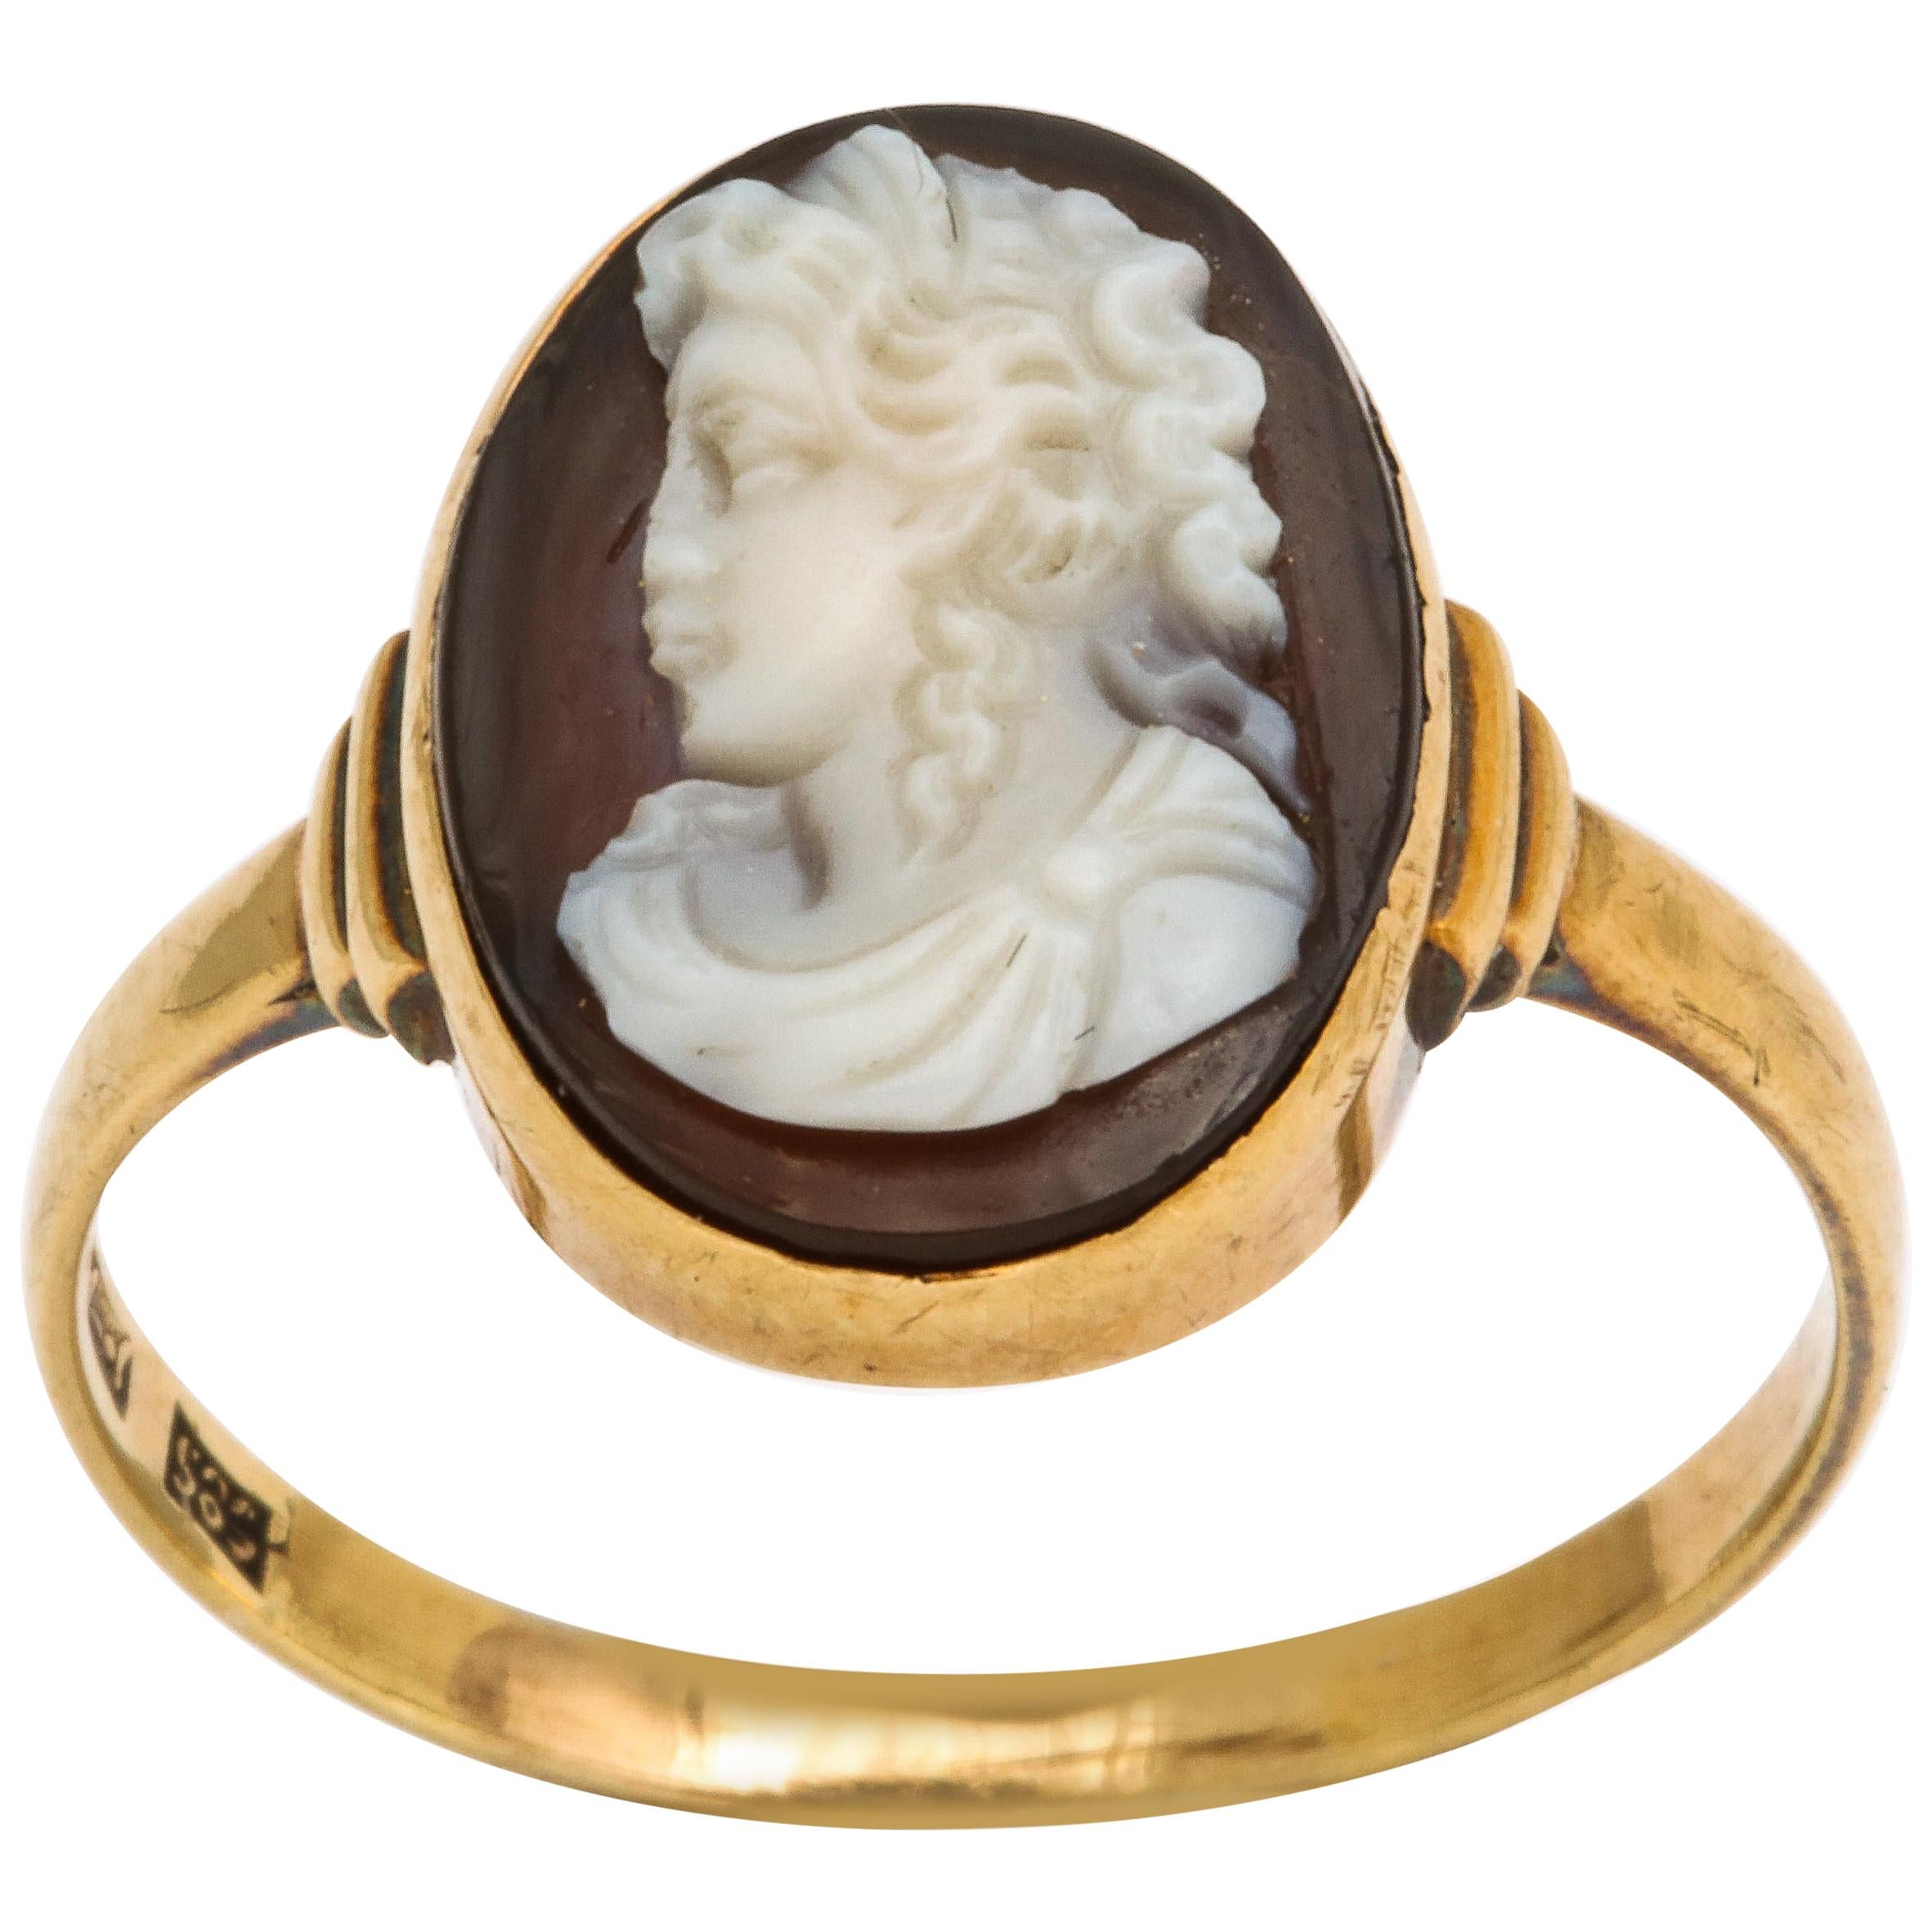 Gold Agate Cameo Ring, circa 1850